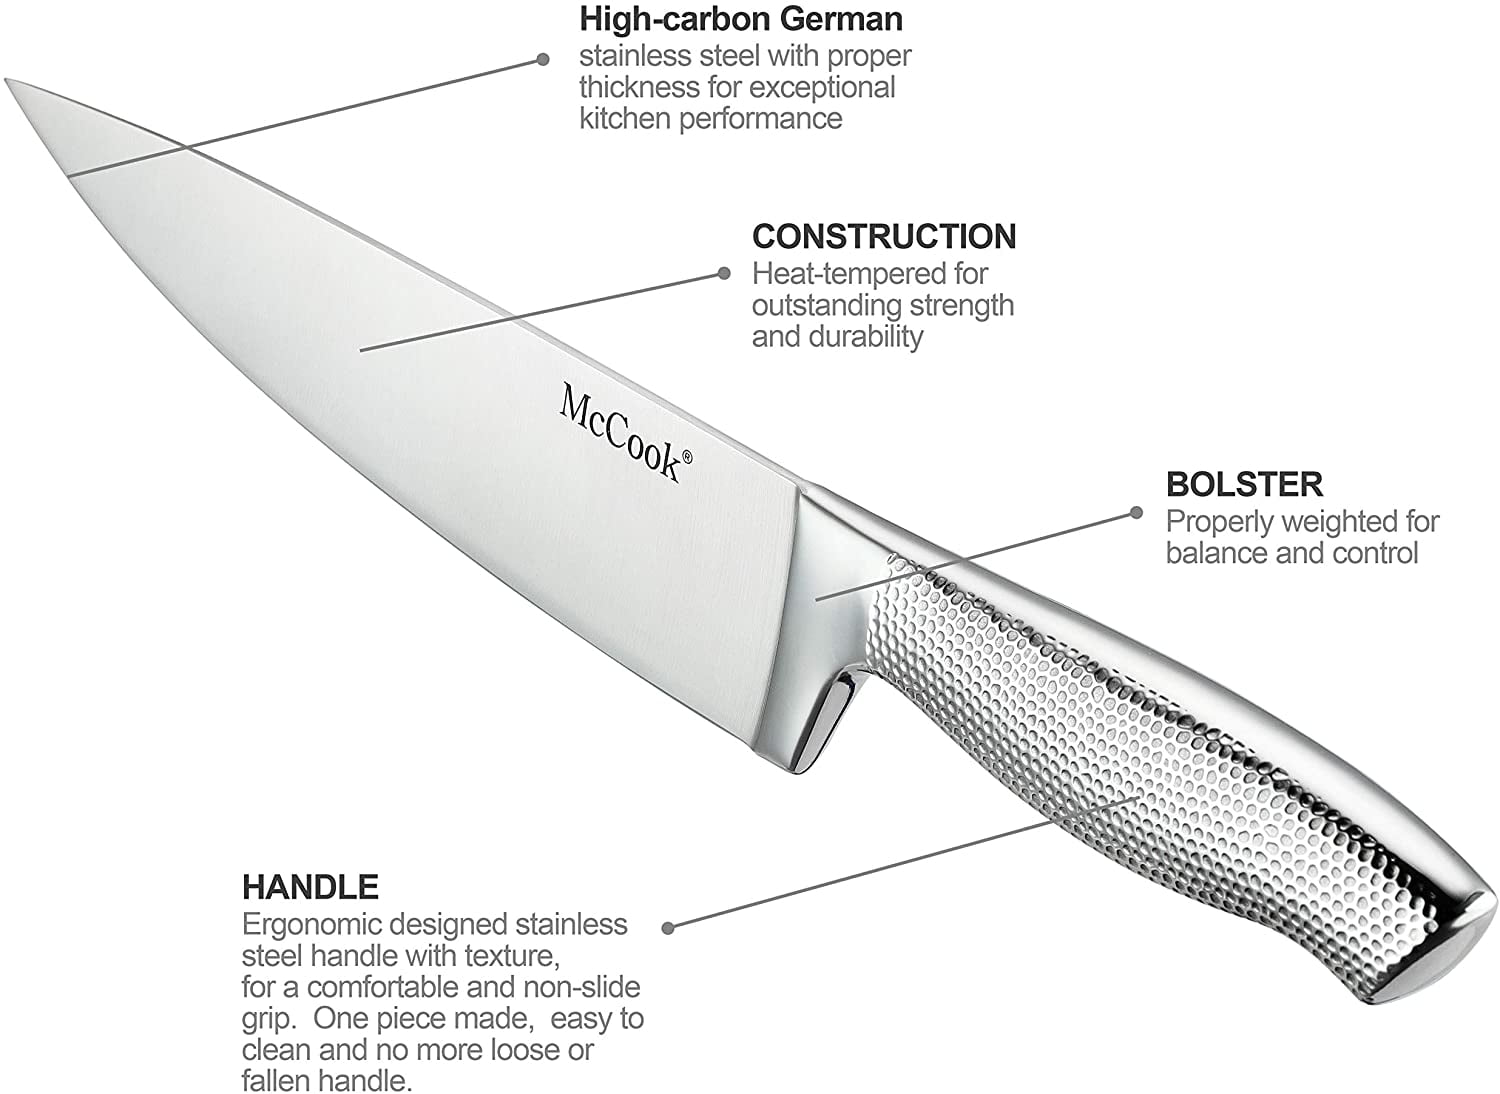 McCook MC20 17pcs Kitchen Knife Set with Block Cutlery Knife Block Set  Stainless Steel